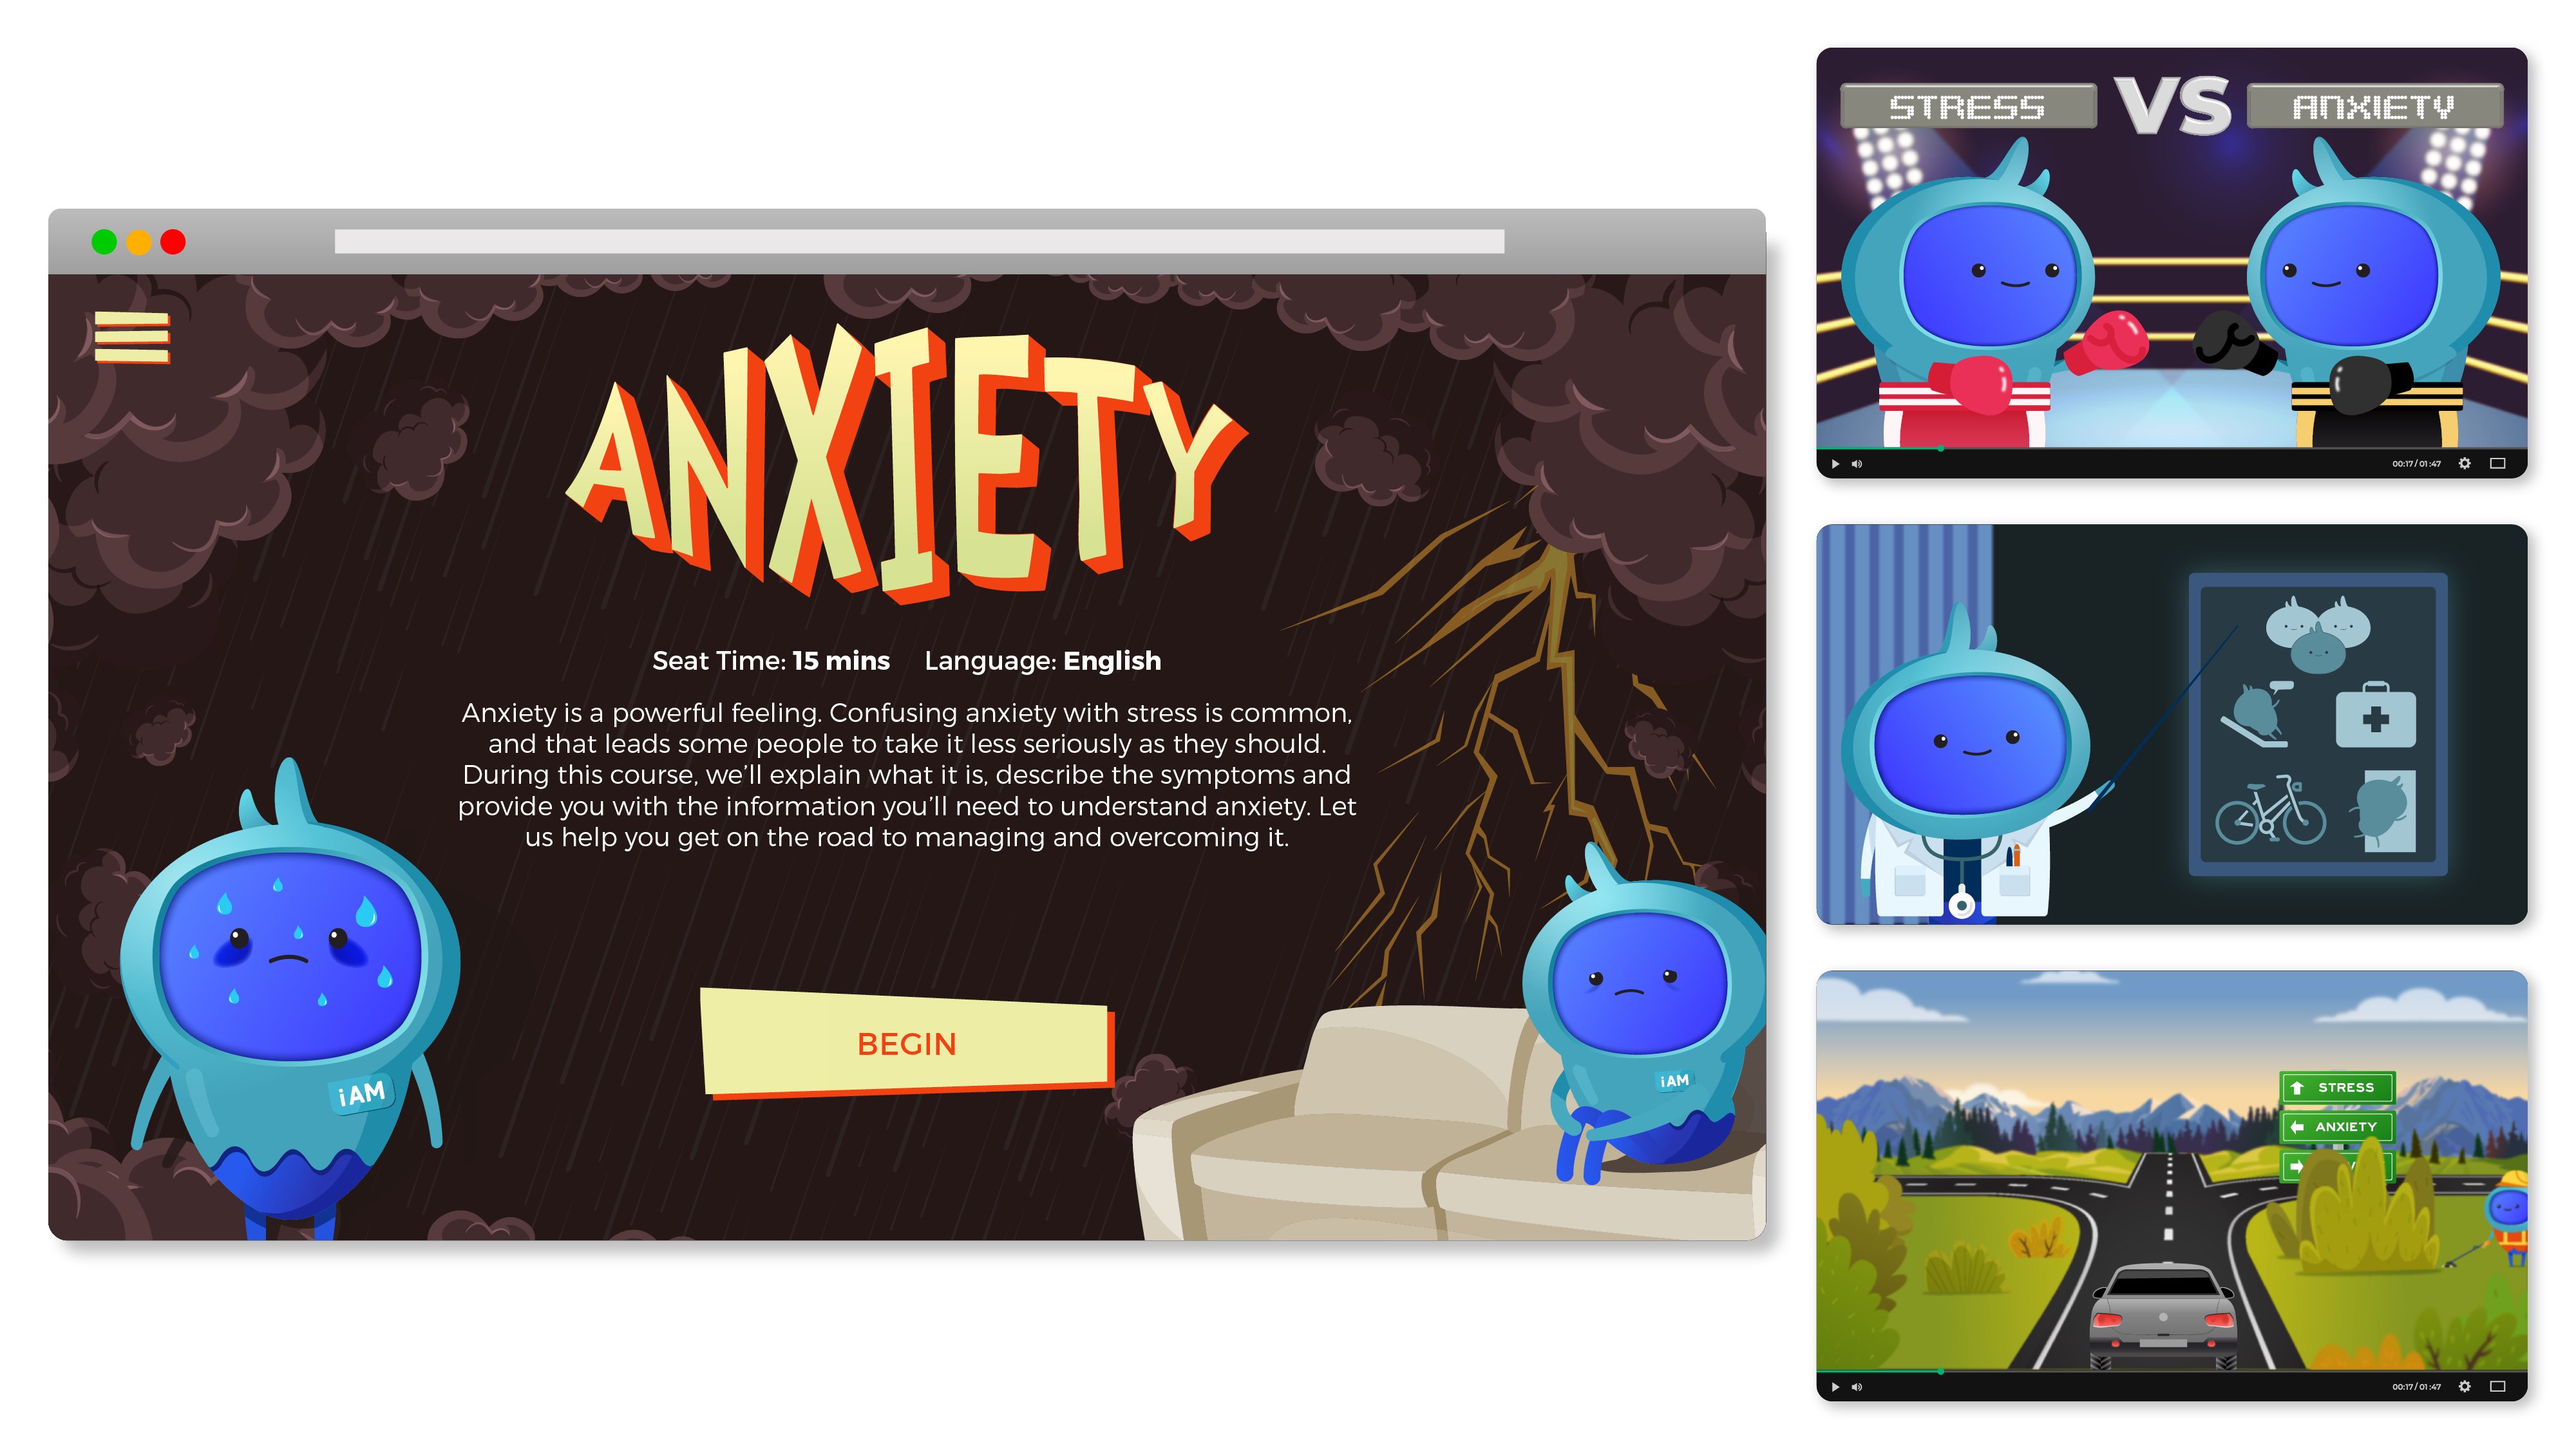 iAM Anxiety - Landing Page Image 2